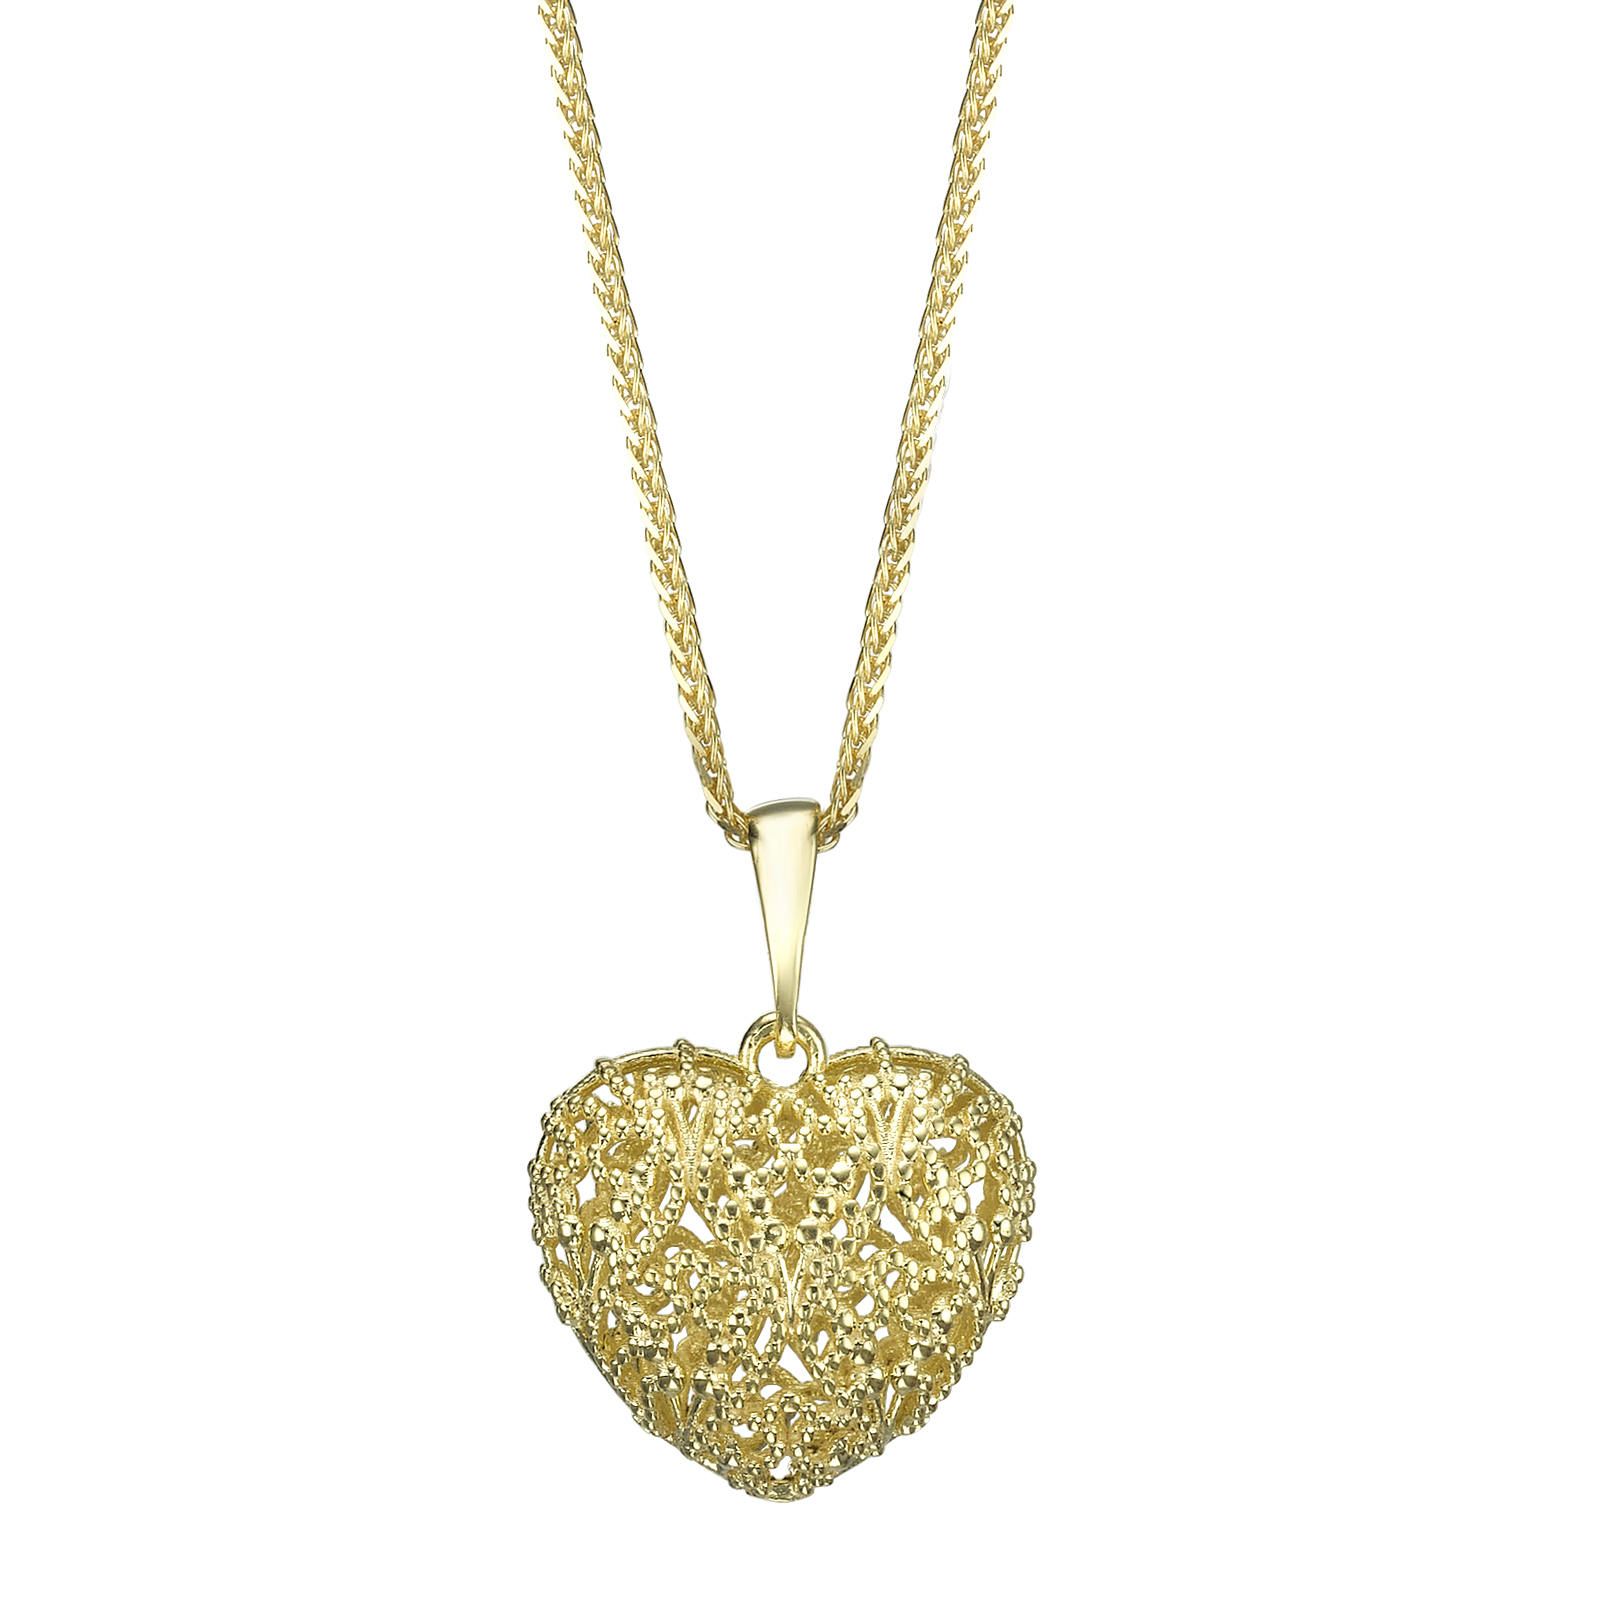  Gold Pendant - Delicate Heart